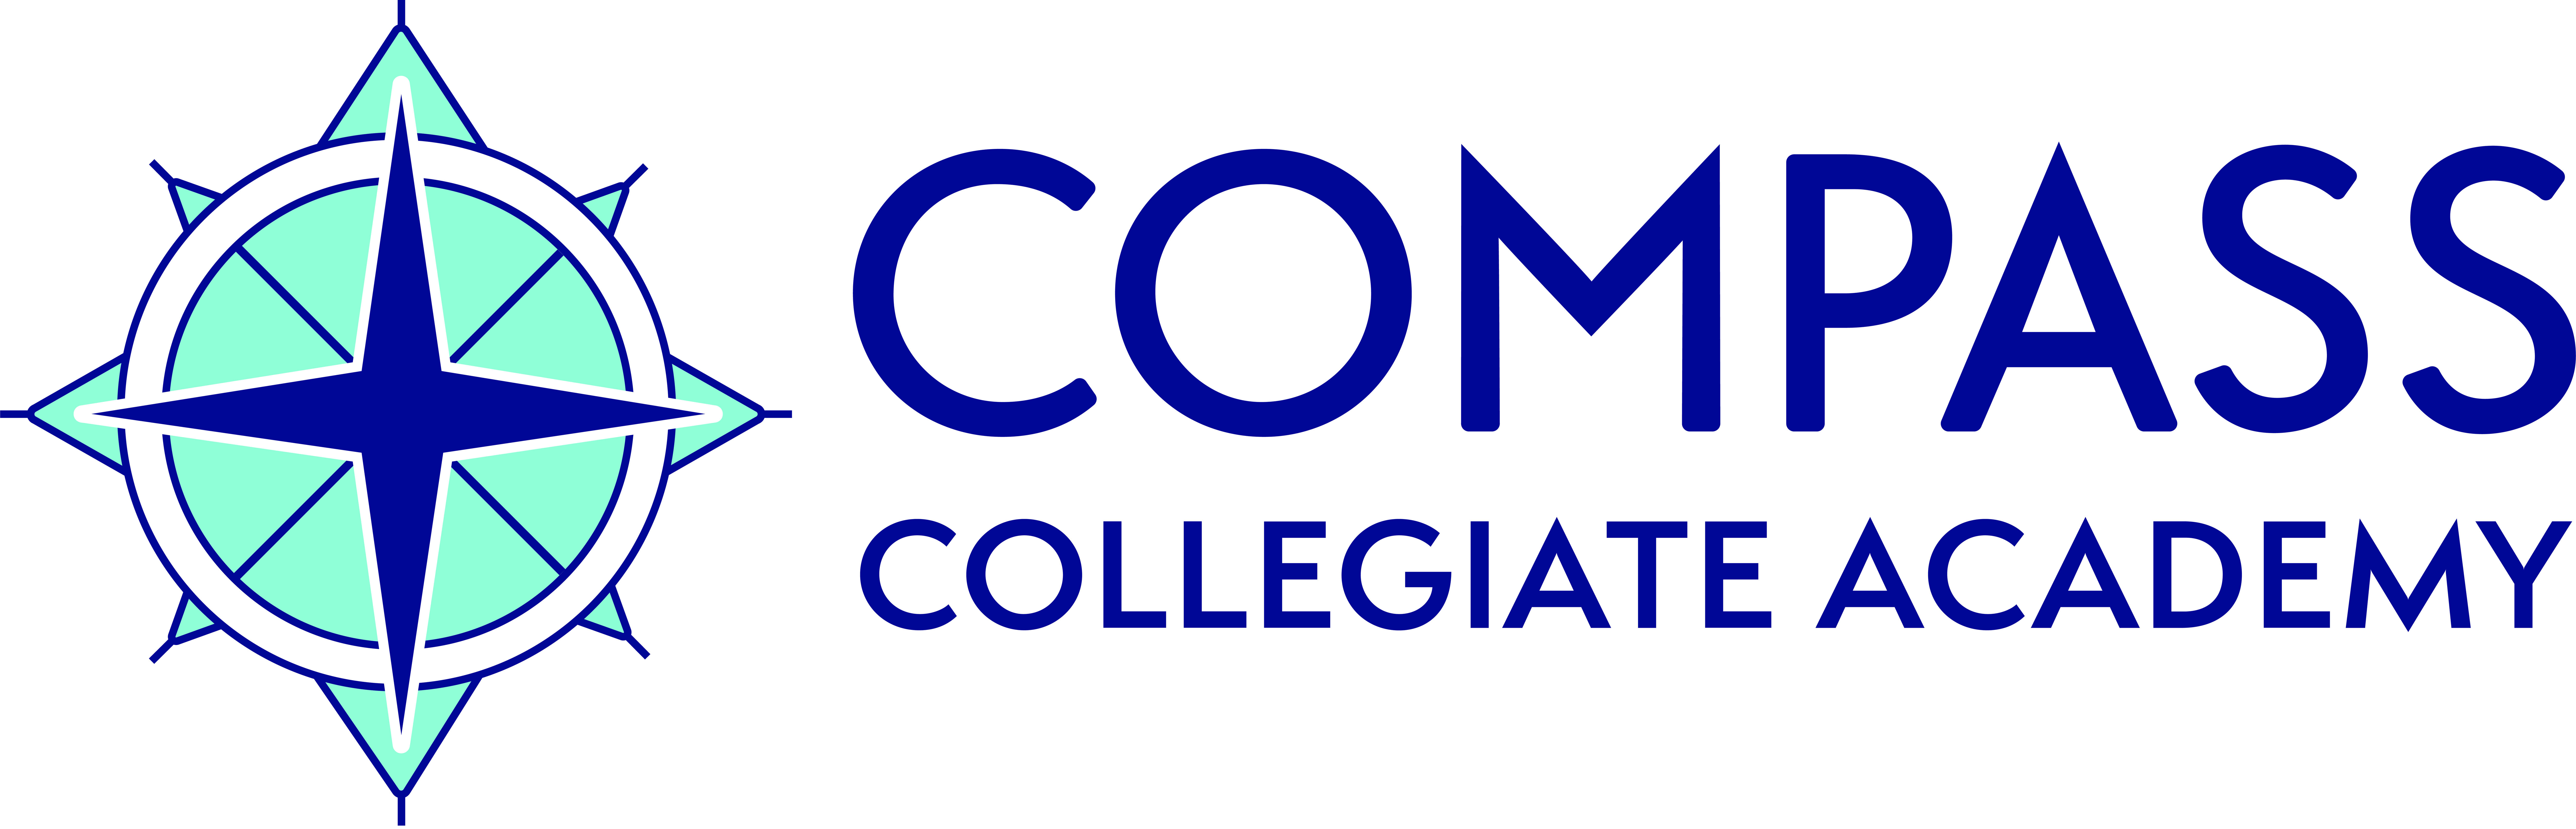 Compass Collegiate Academy